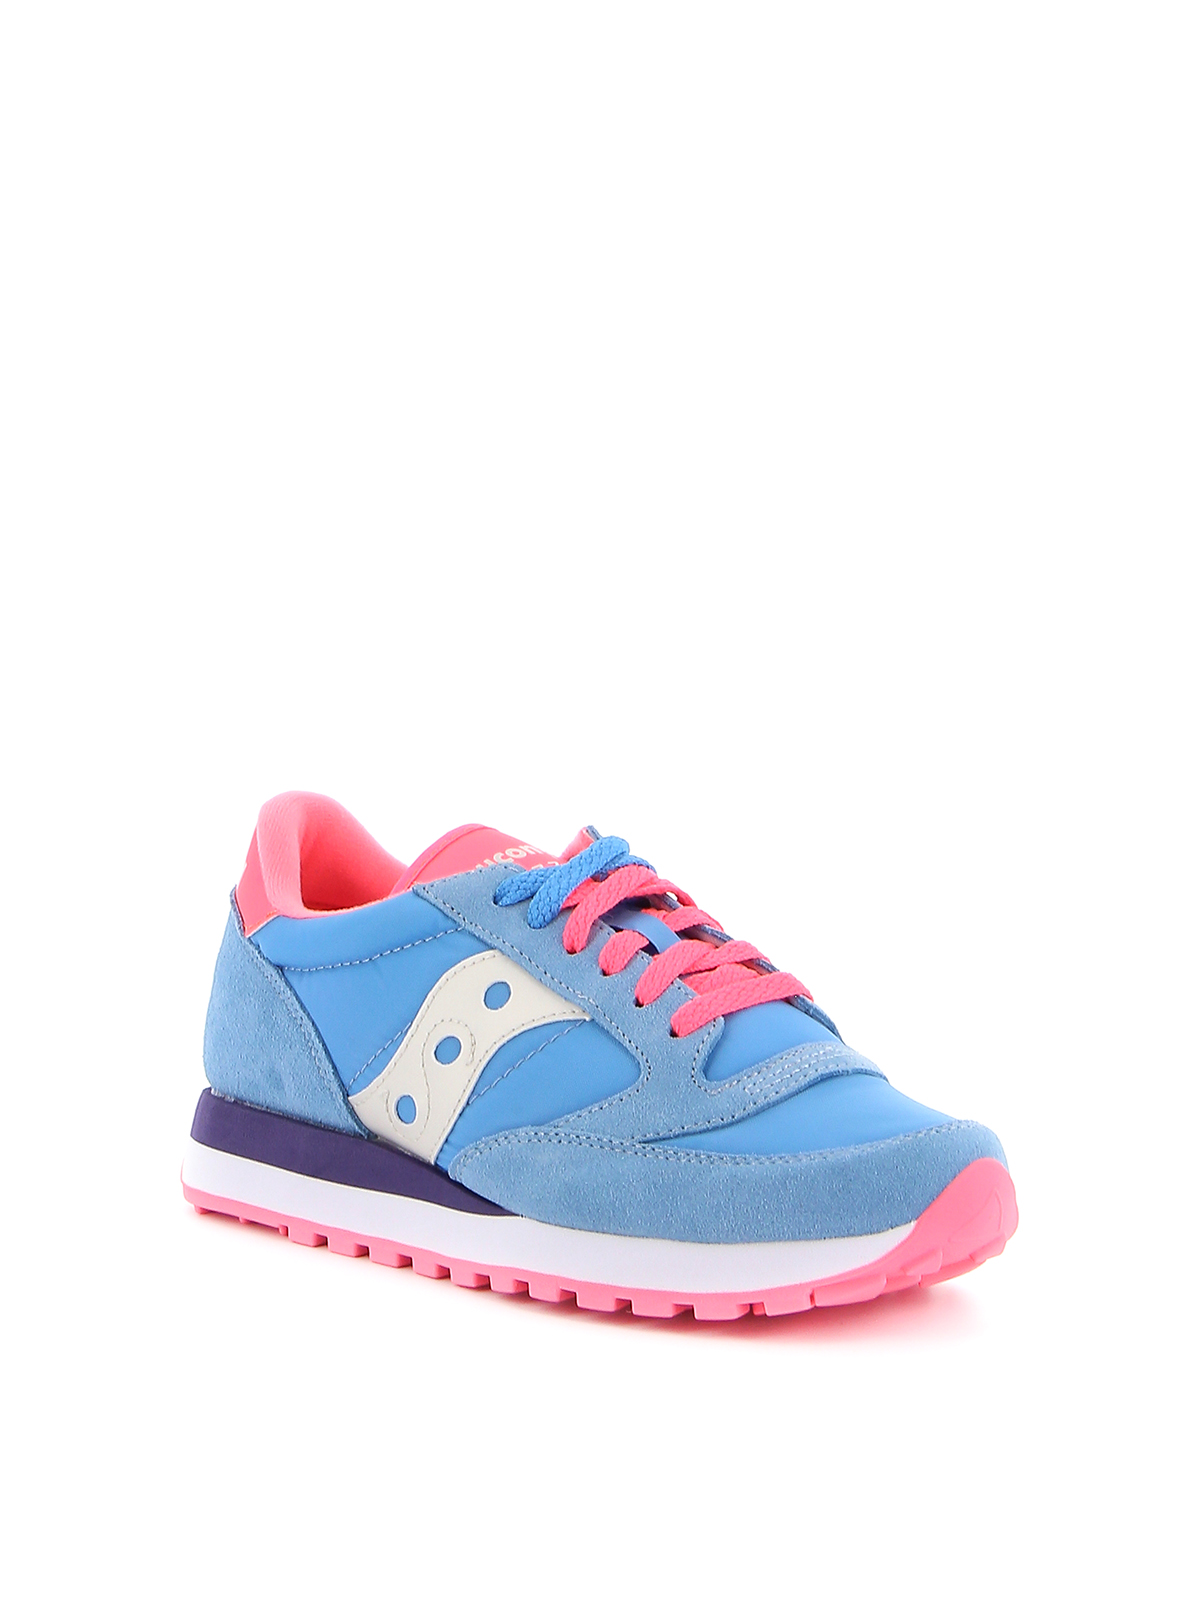 Saucony - Sneaker Jazz Original azzurre e rosa - sneakers - 1044572